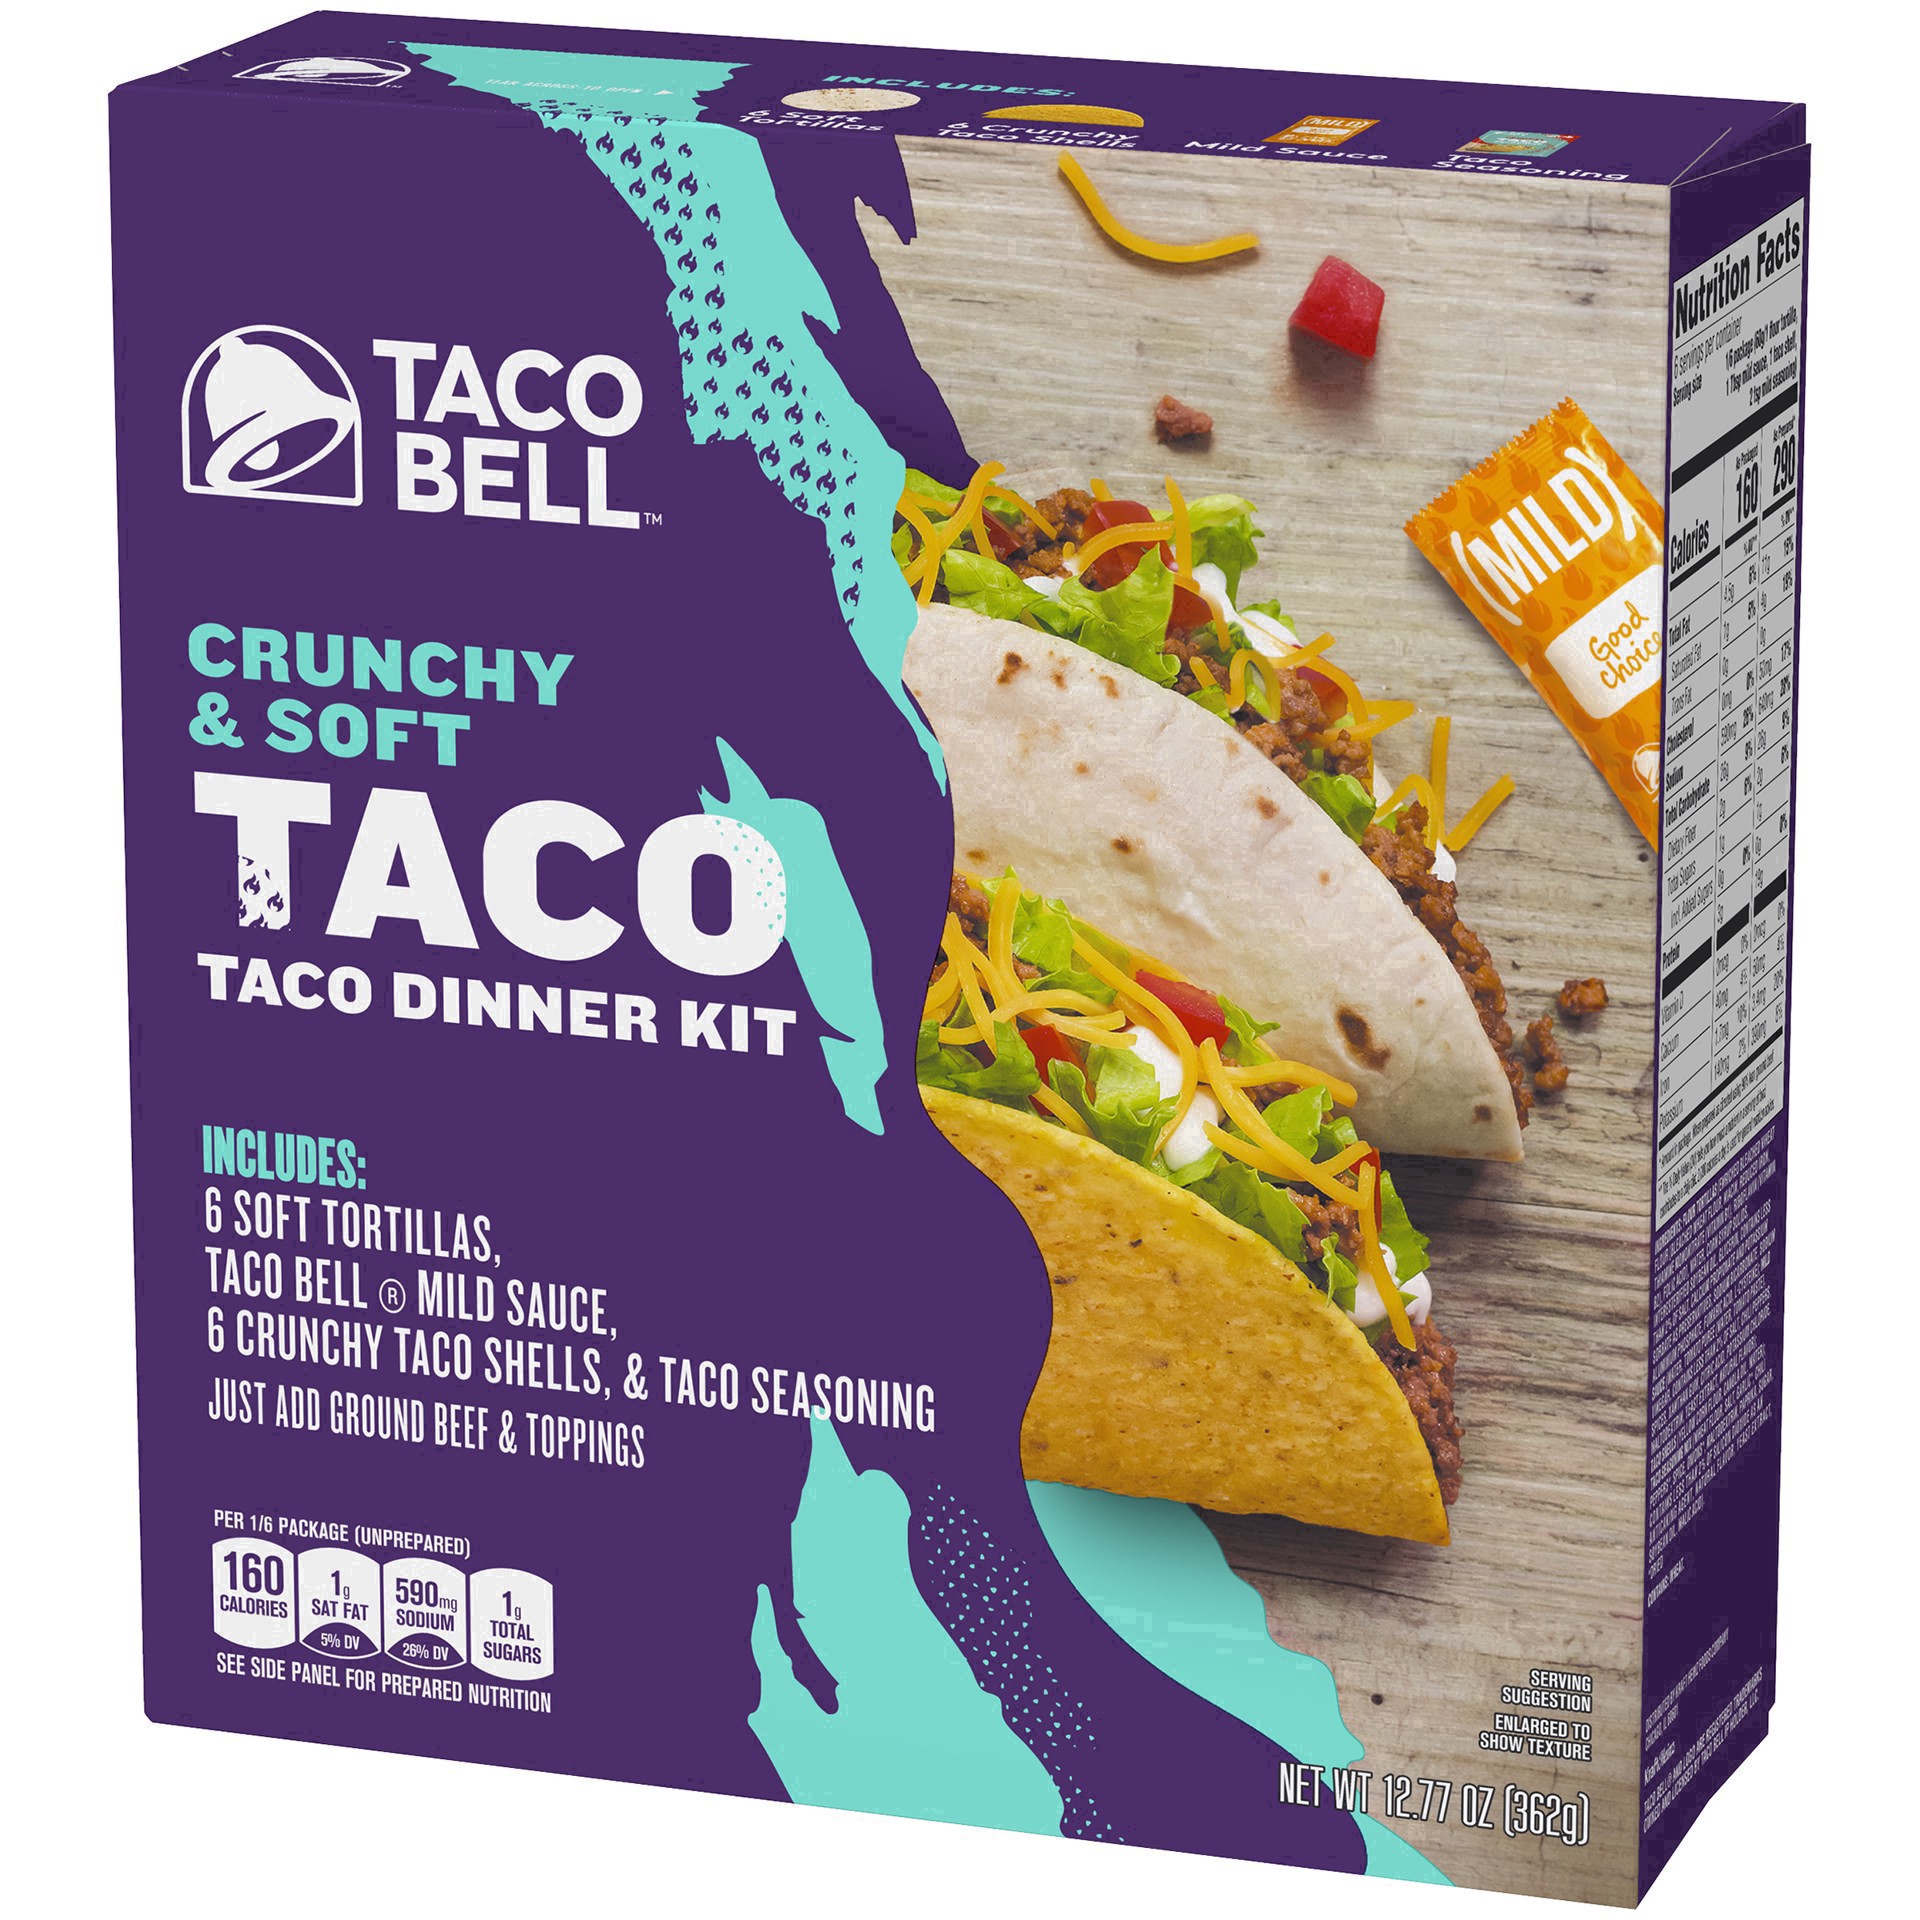 slide 55 of 101, Taco Bell Crunchy & Soft Taco Cravings Kit with 6 Soft Tortillas, 6 Crunchy Taco Shells, Taco Bell Mild Sauce & Seasoning, 12.77 oz Box, 1 ea